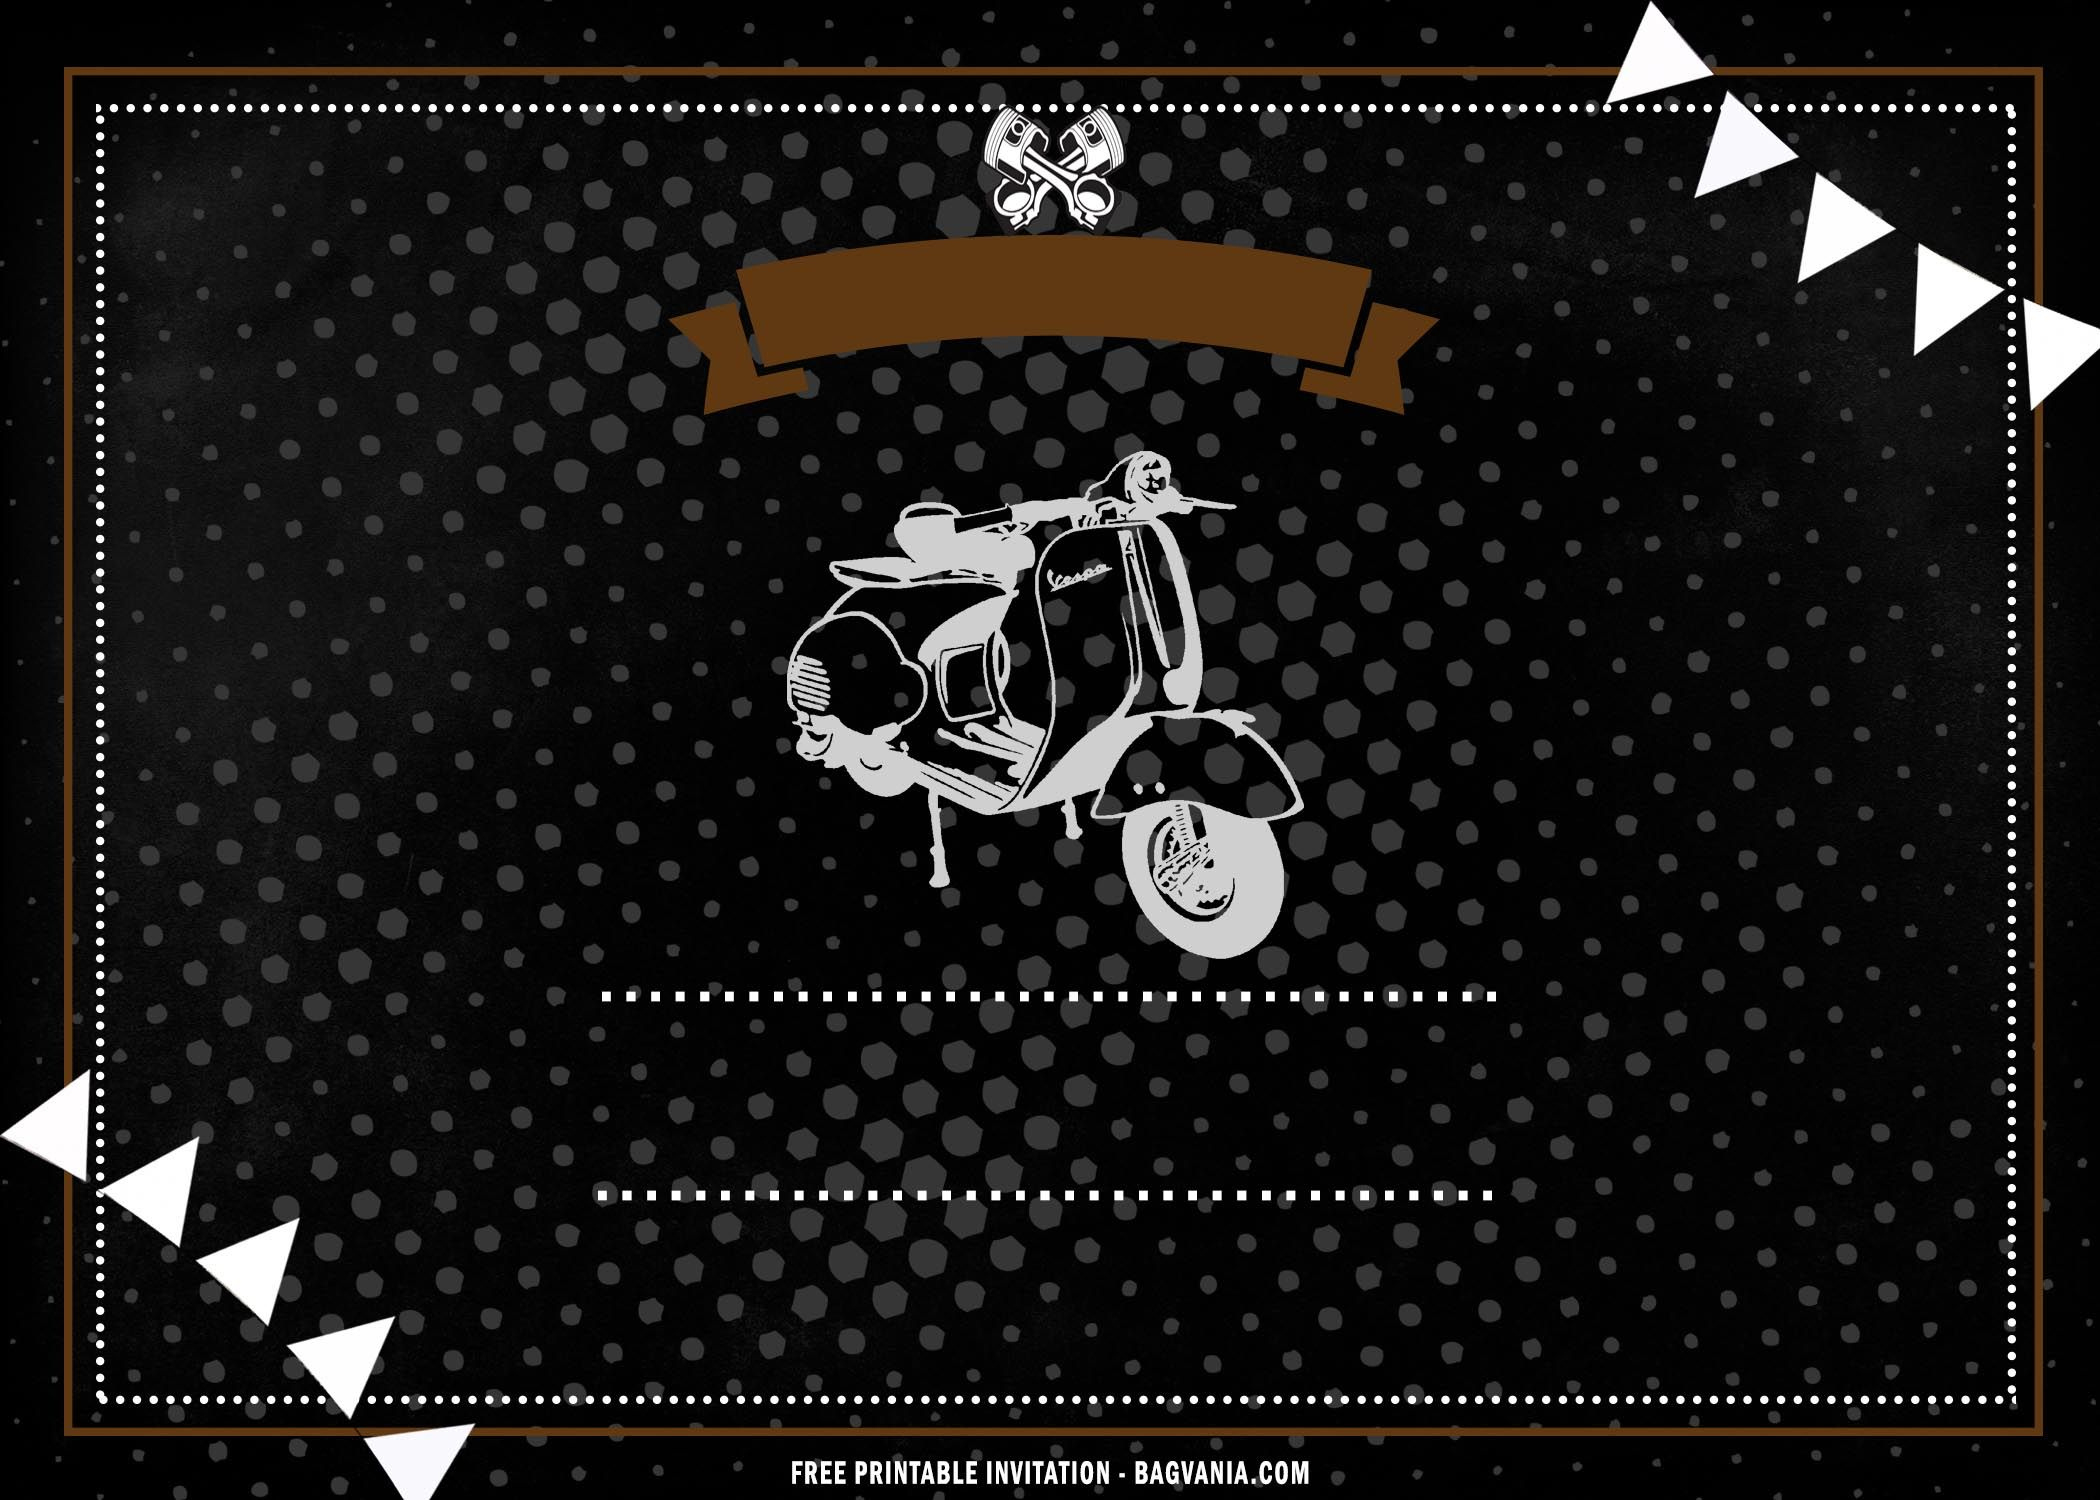 Free Printable) - Motorcycle Birthday Invitation Templates inside Motorcycle Invitations Free Printable